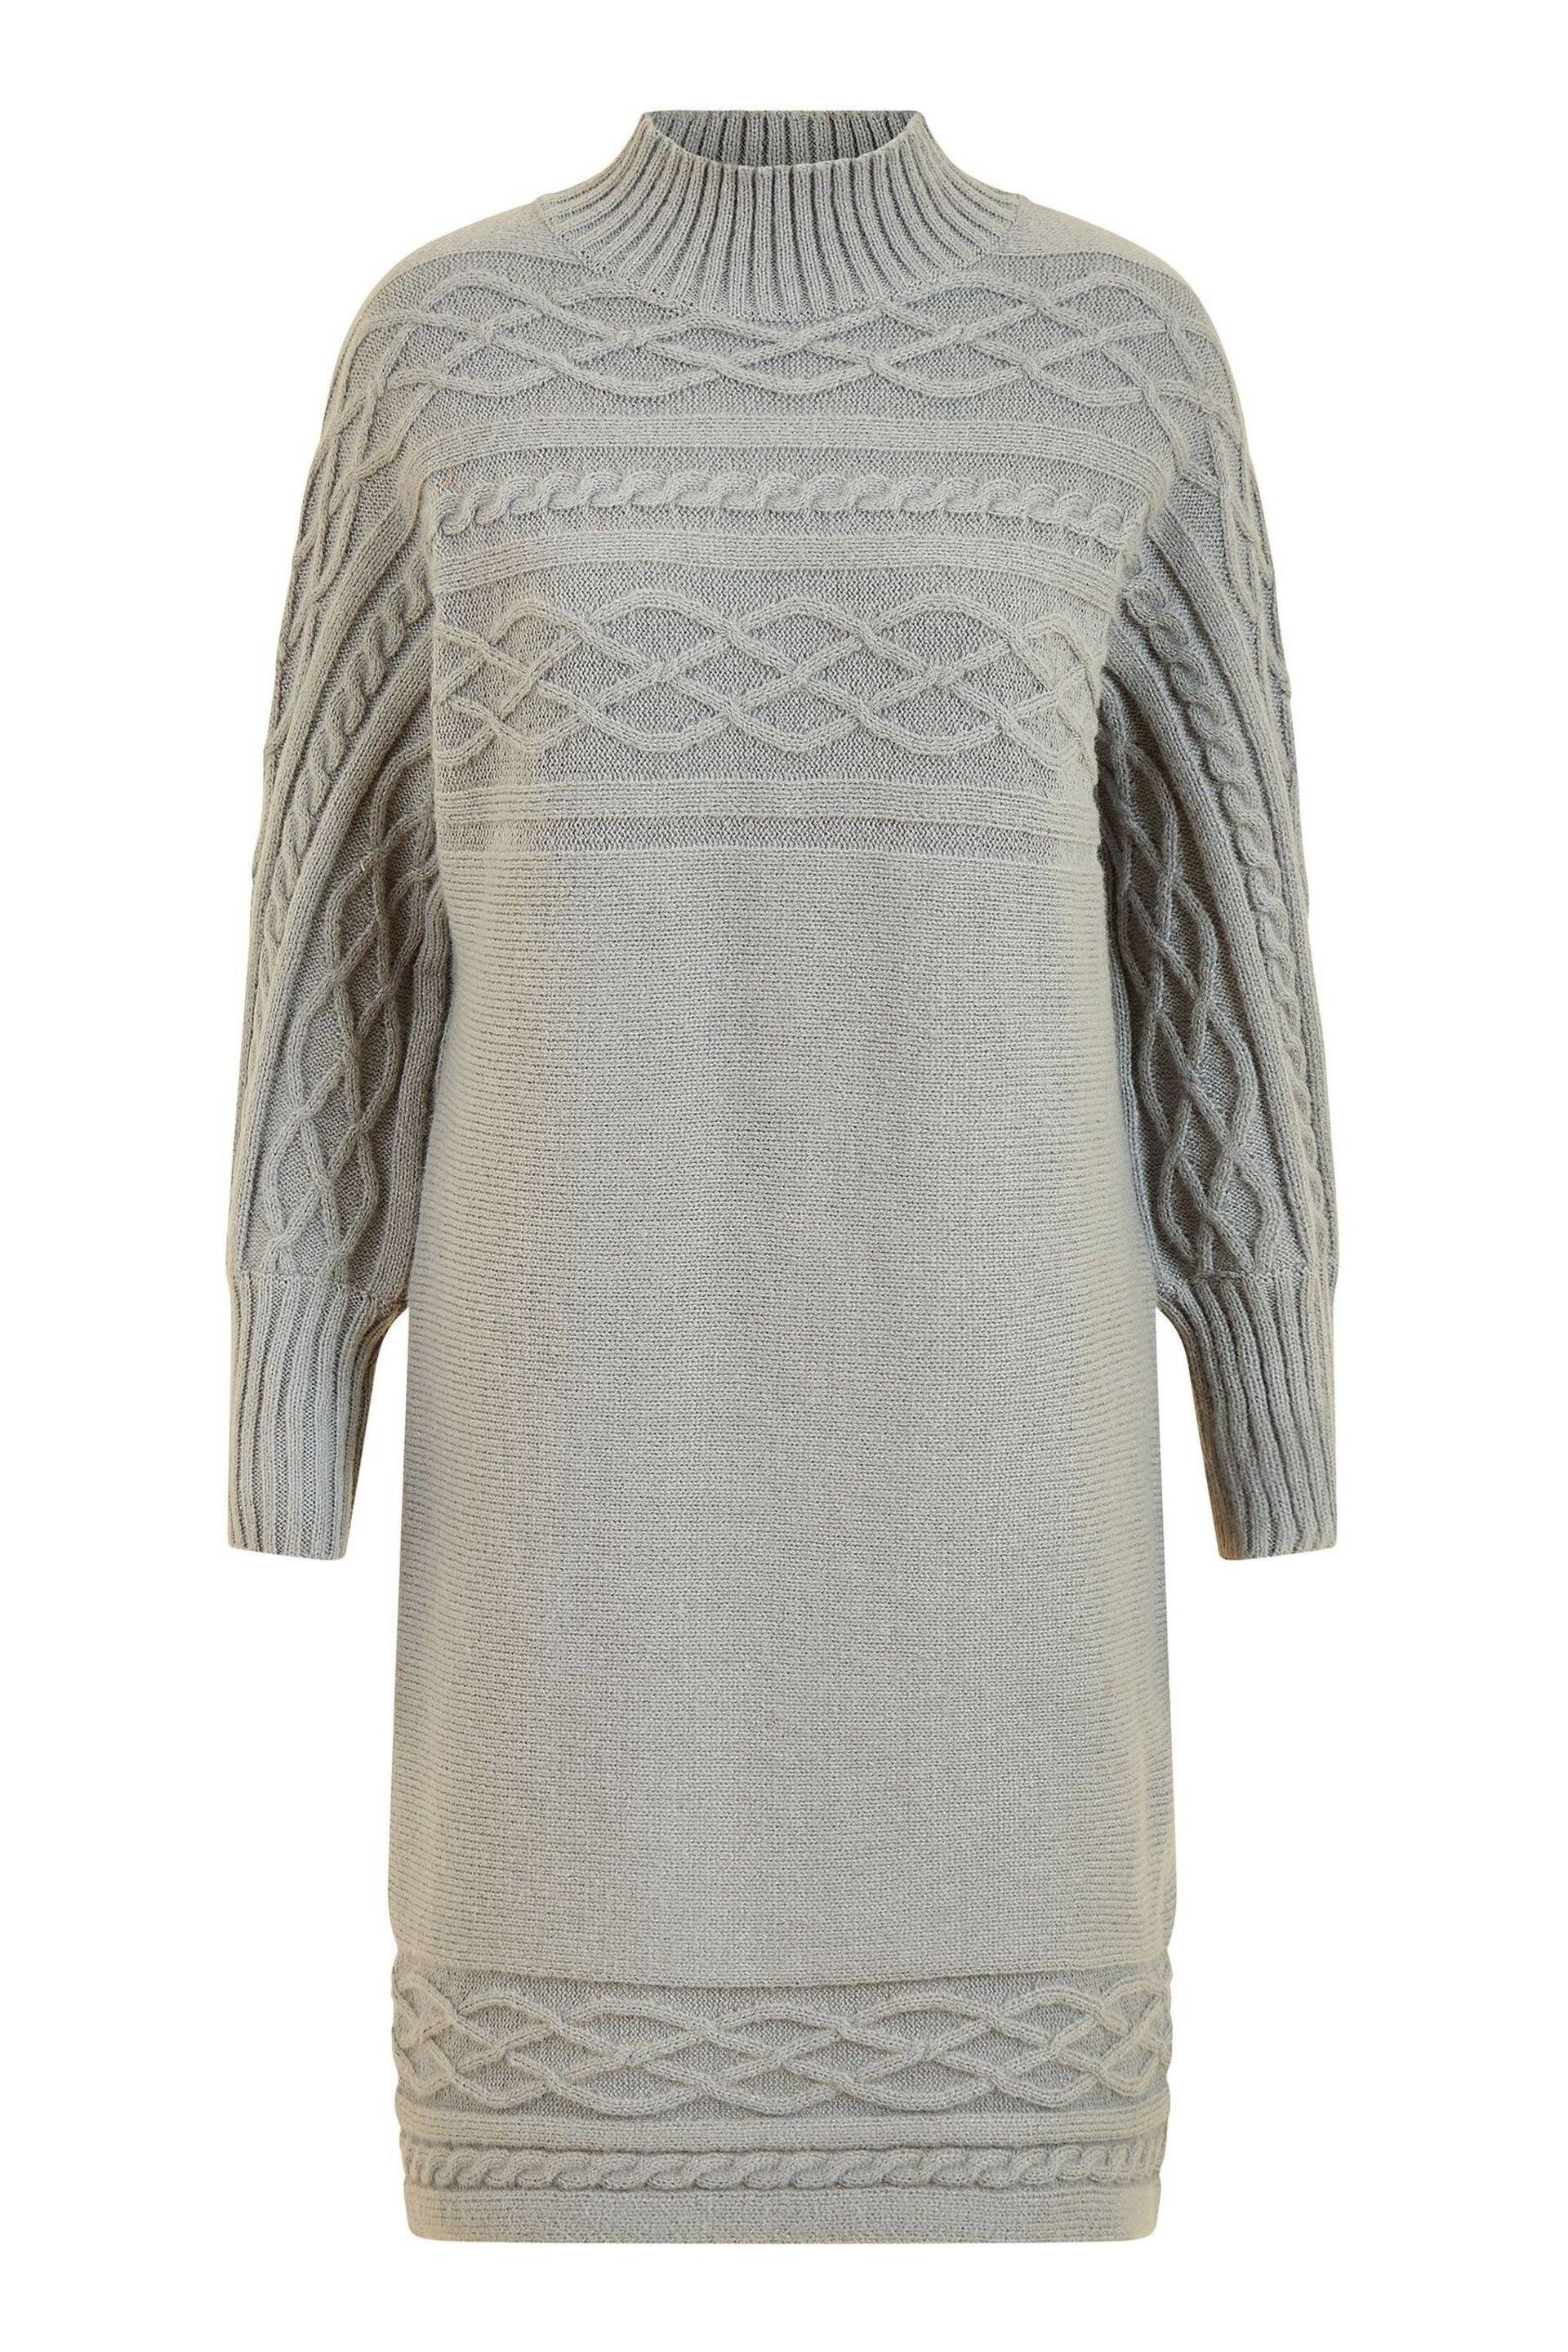 Yumi Grey Cable Knit Tunic Dress - Image 5 of 5